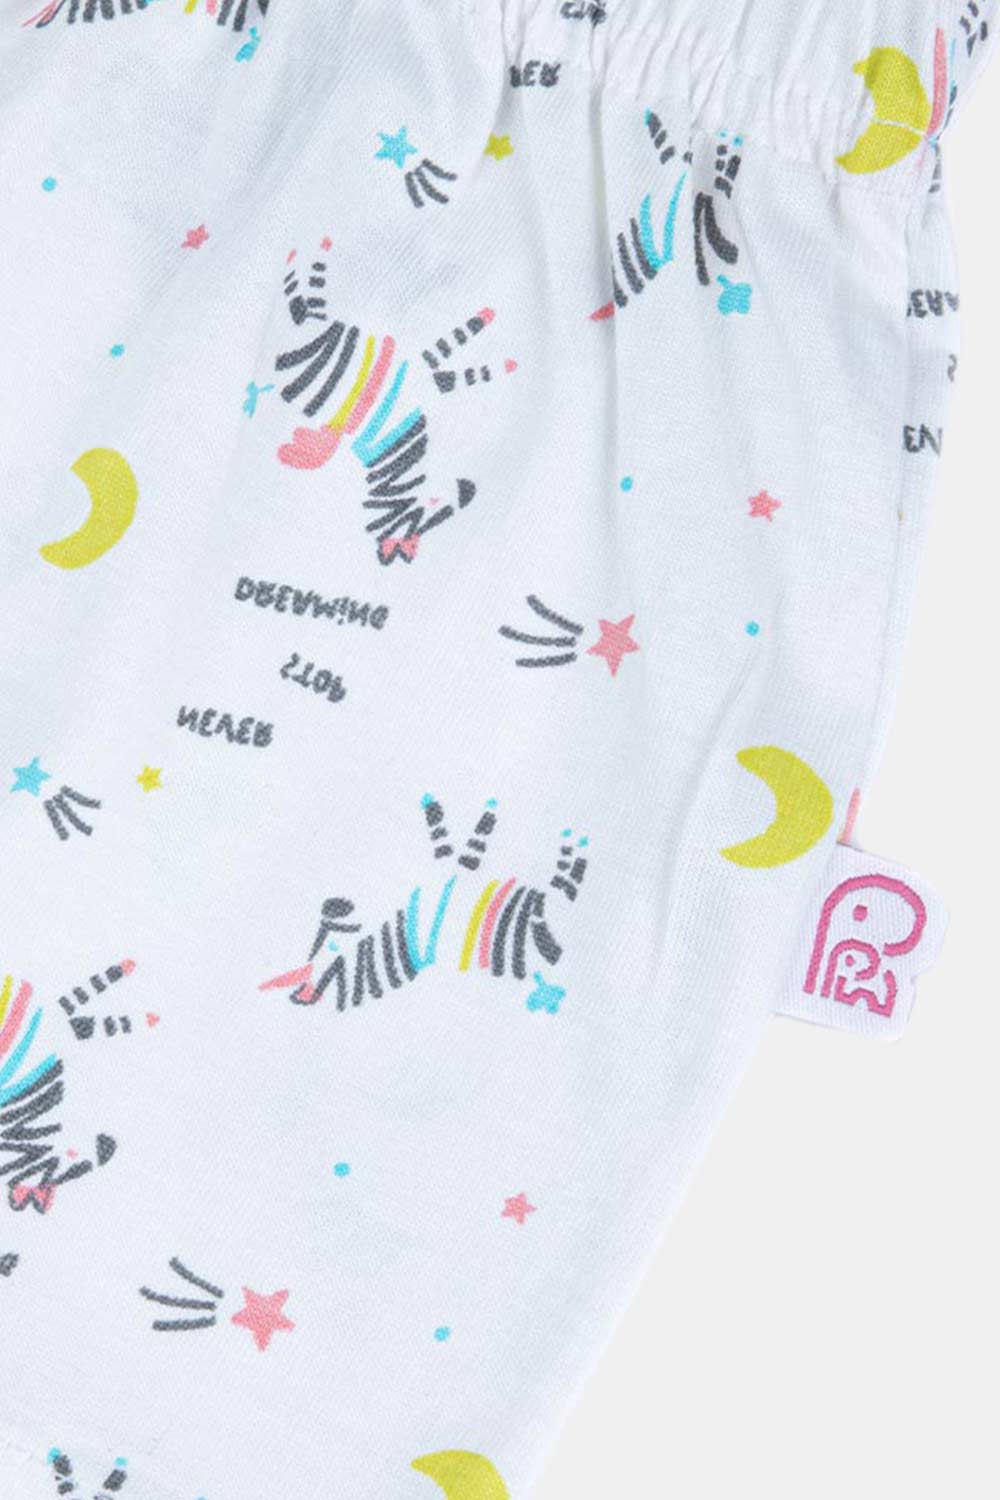 Oh Baby Zeebra Print - Shorts SH01 Size   0m-3m Color Aqua